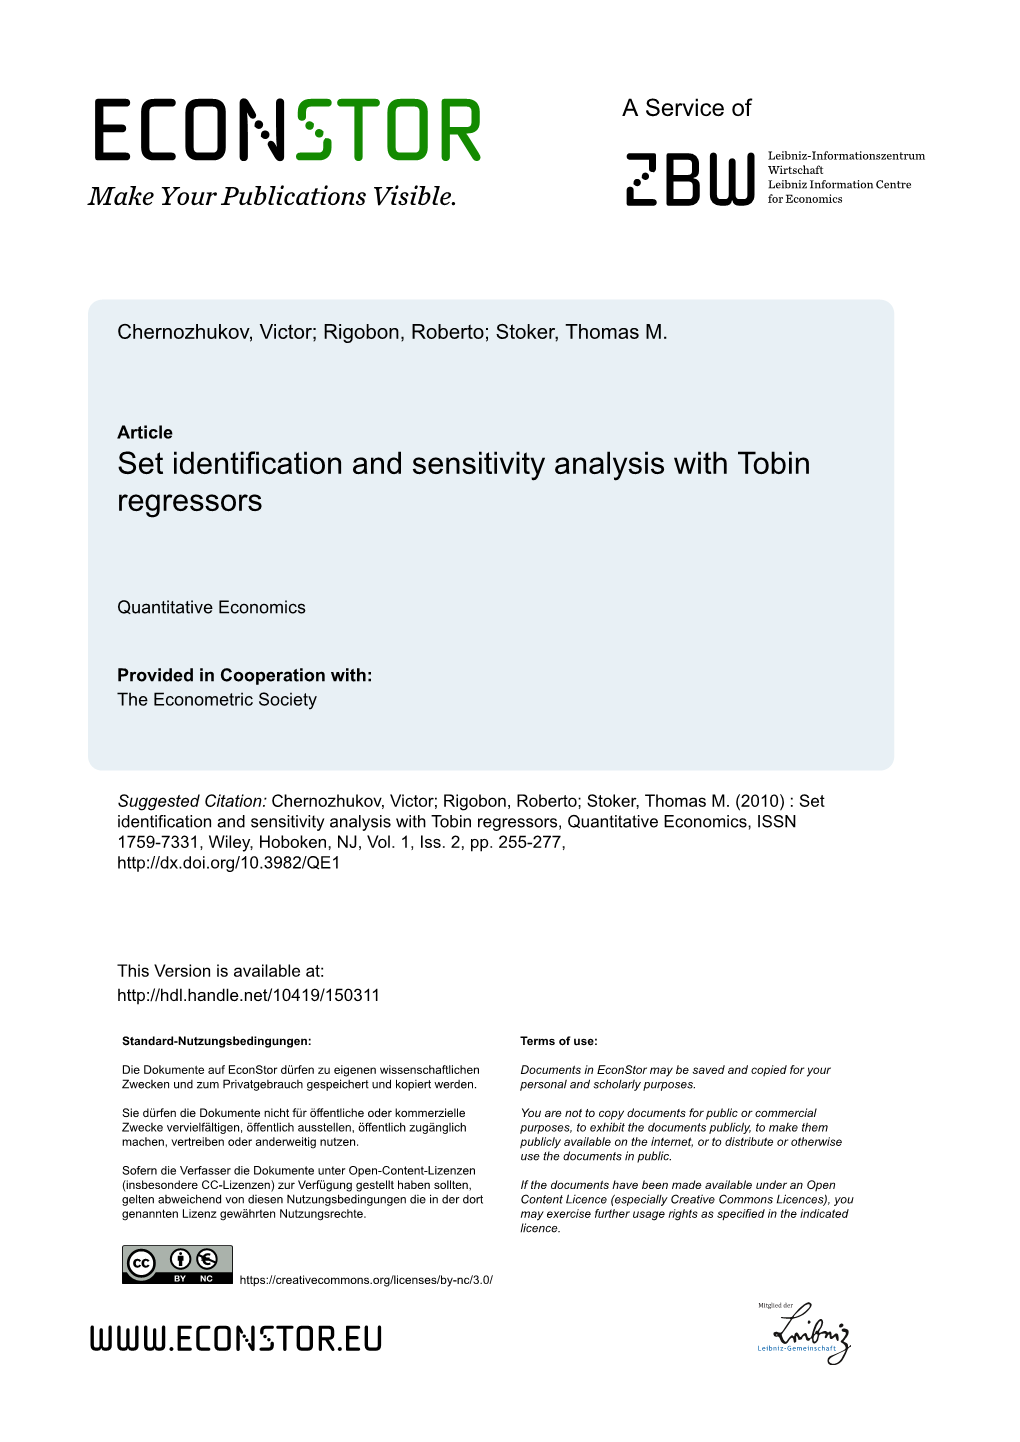 Set Identification and Sensitivity Analysis with Tobin Regressors